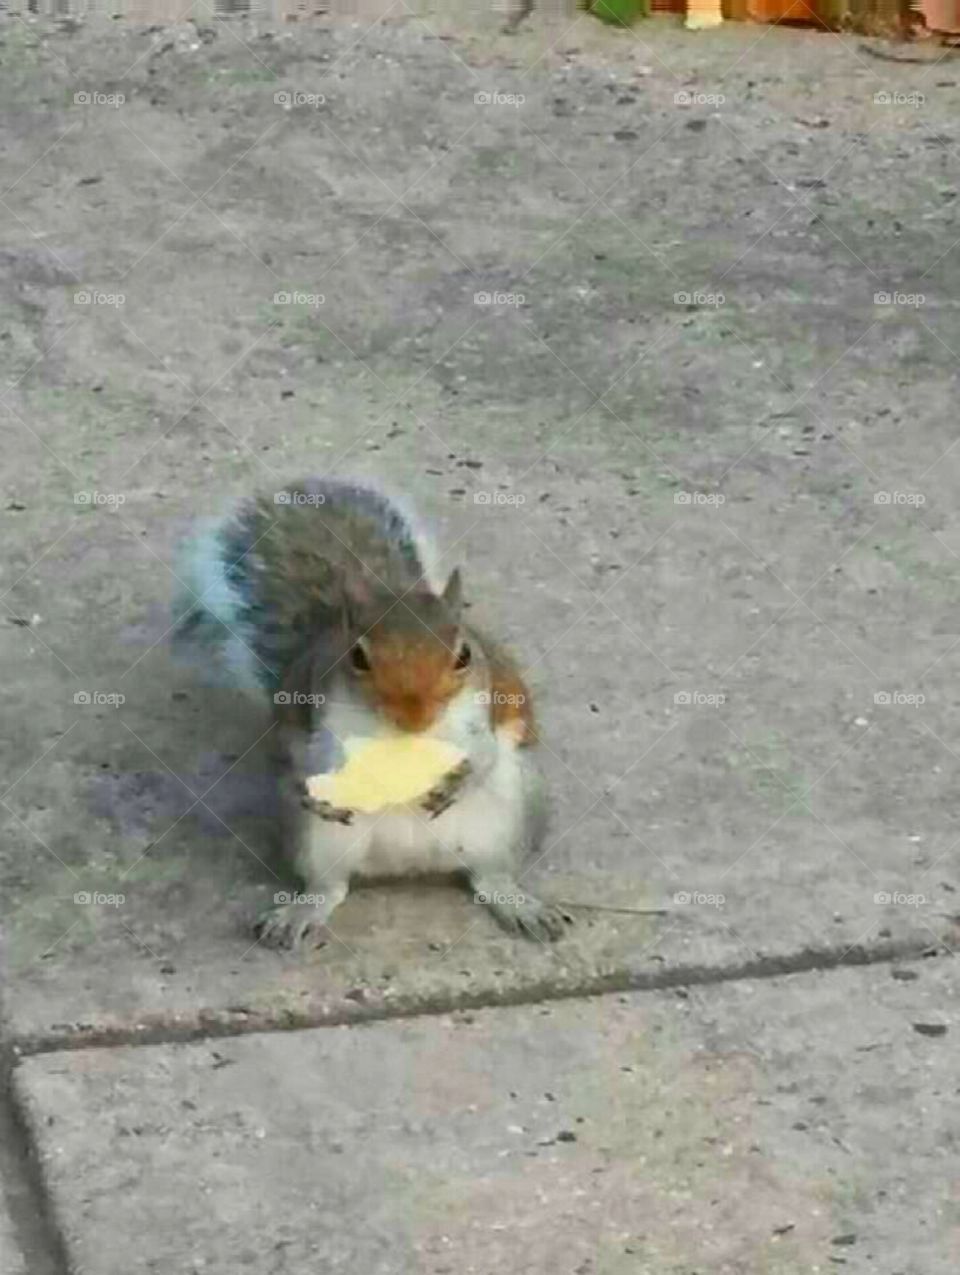 A squirrel eating a cracker